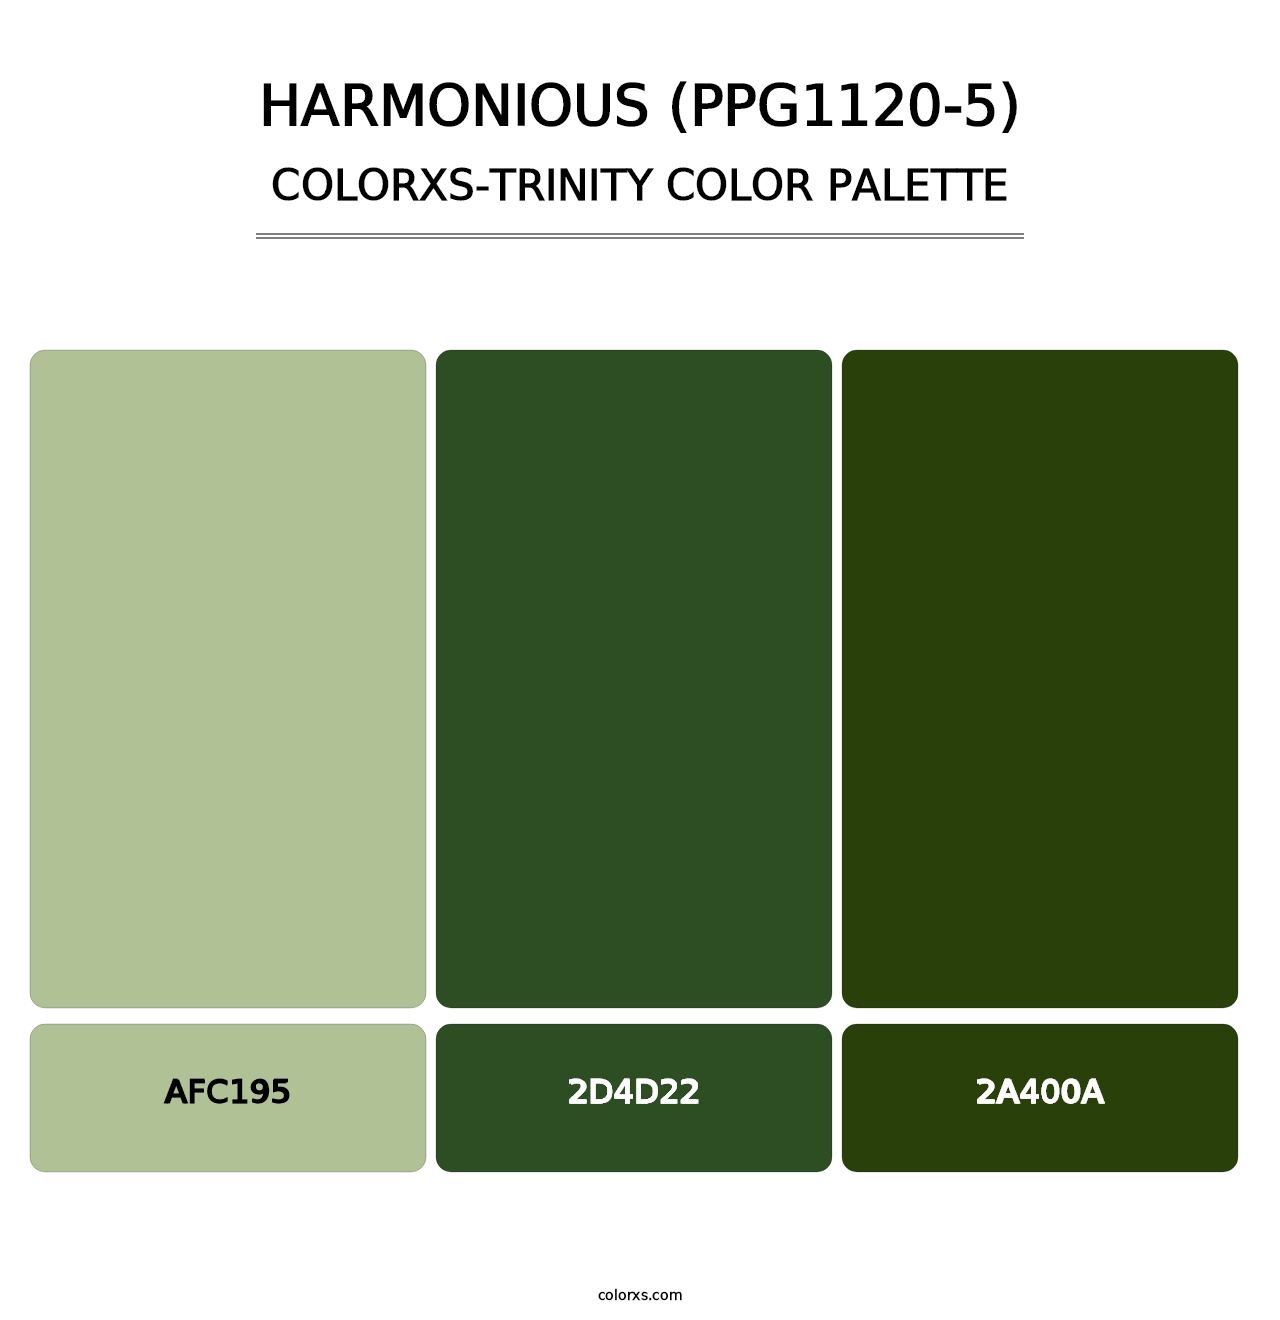 Harmonious (PPG1120-5) - Colorxs Trinity Palette